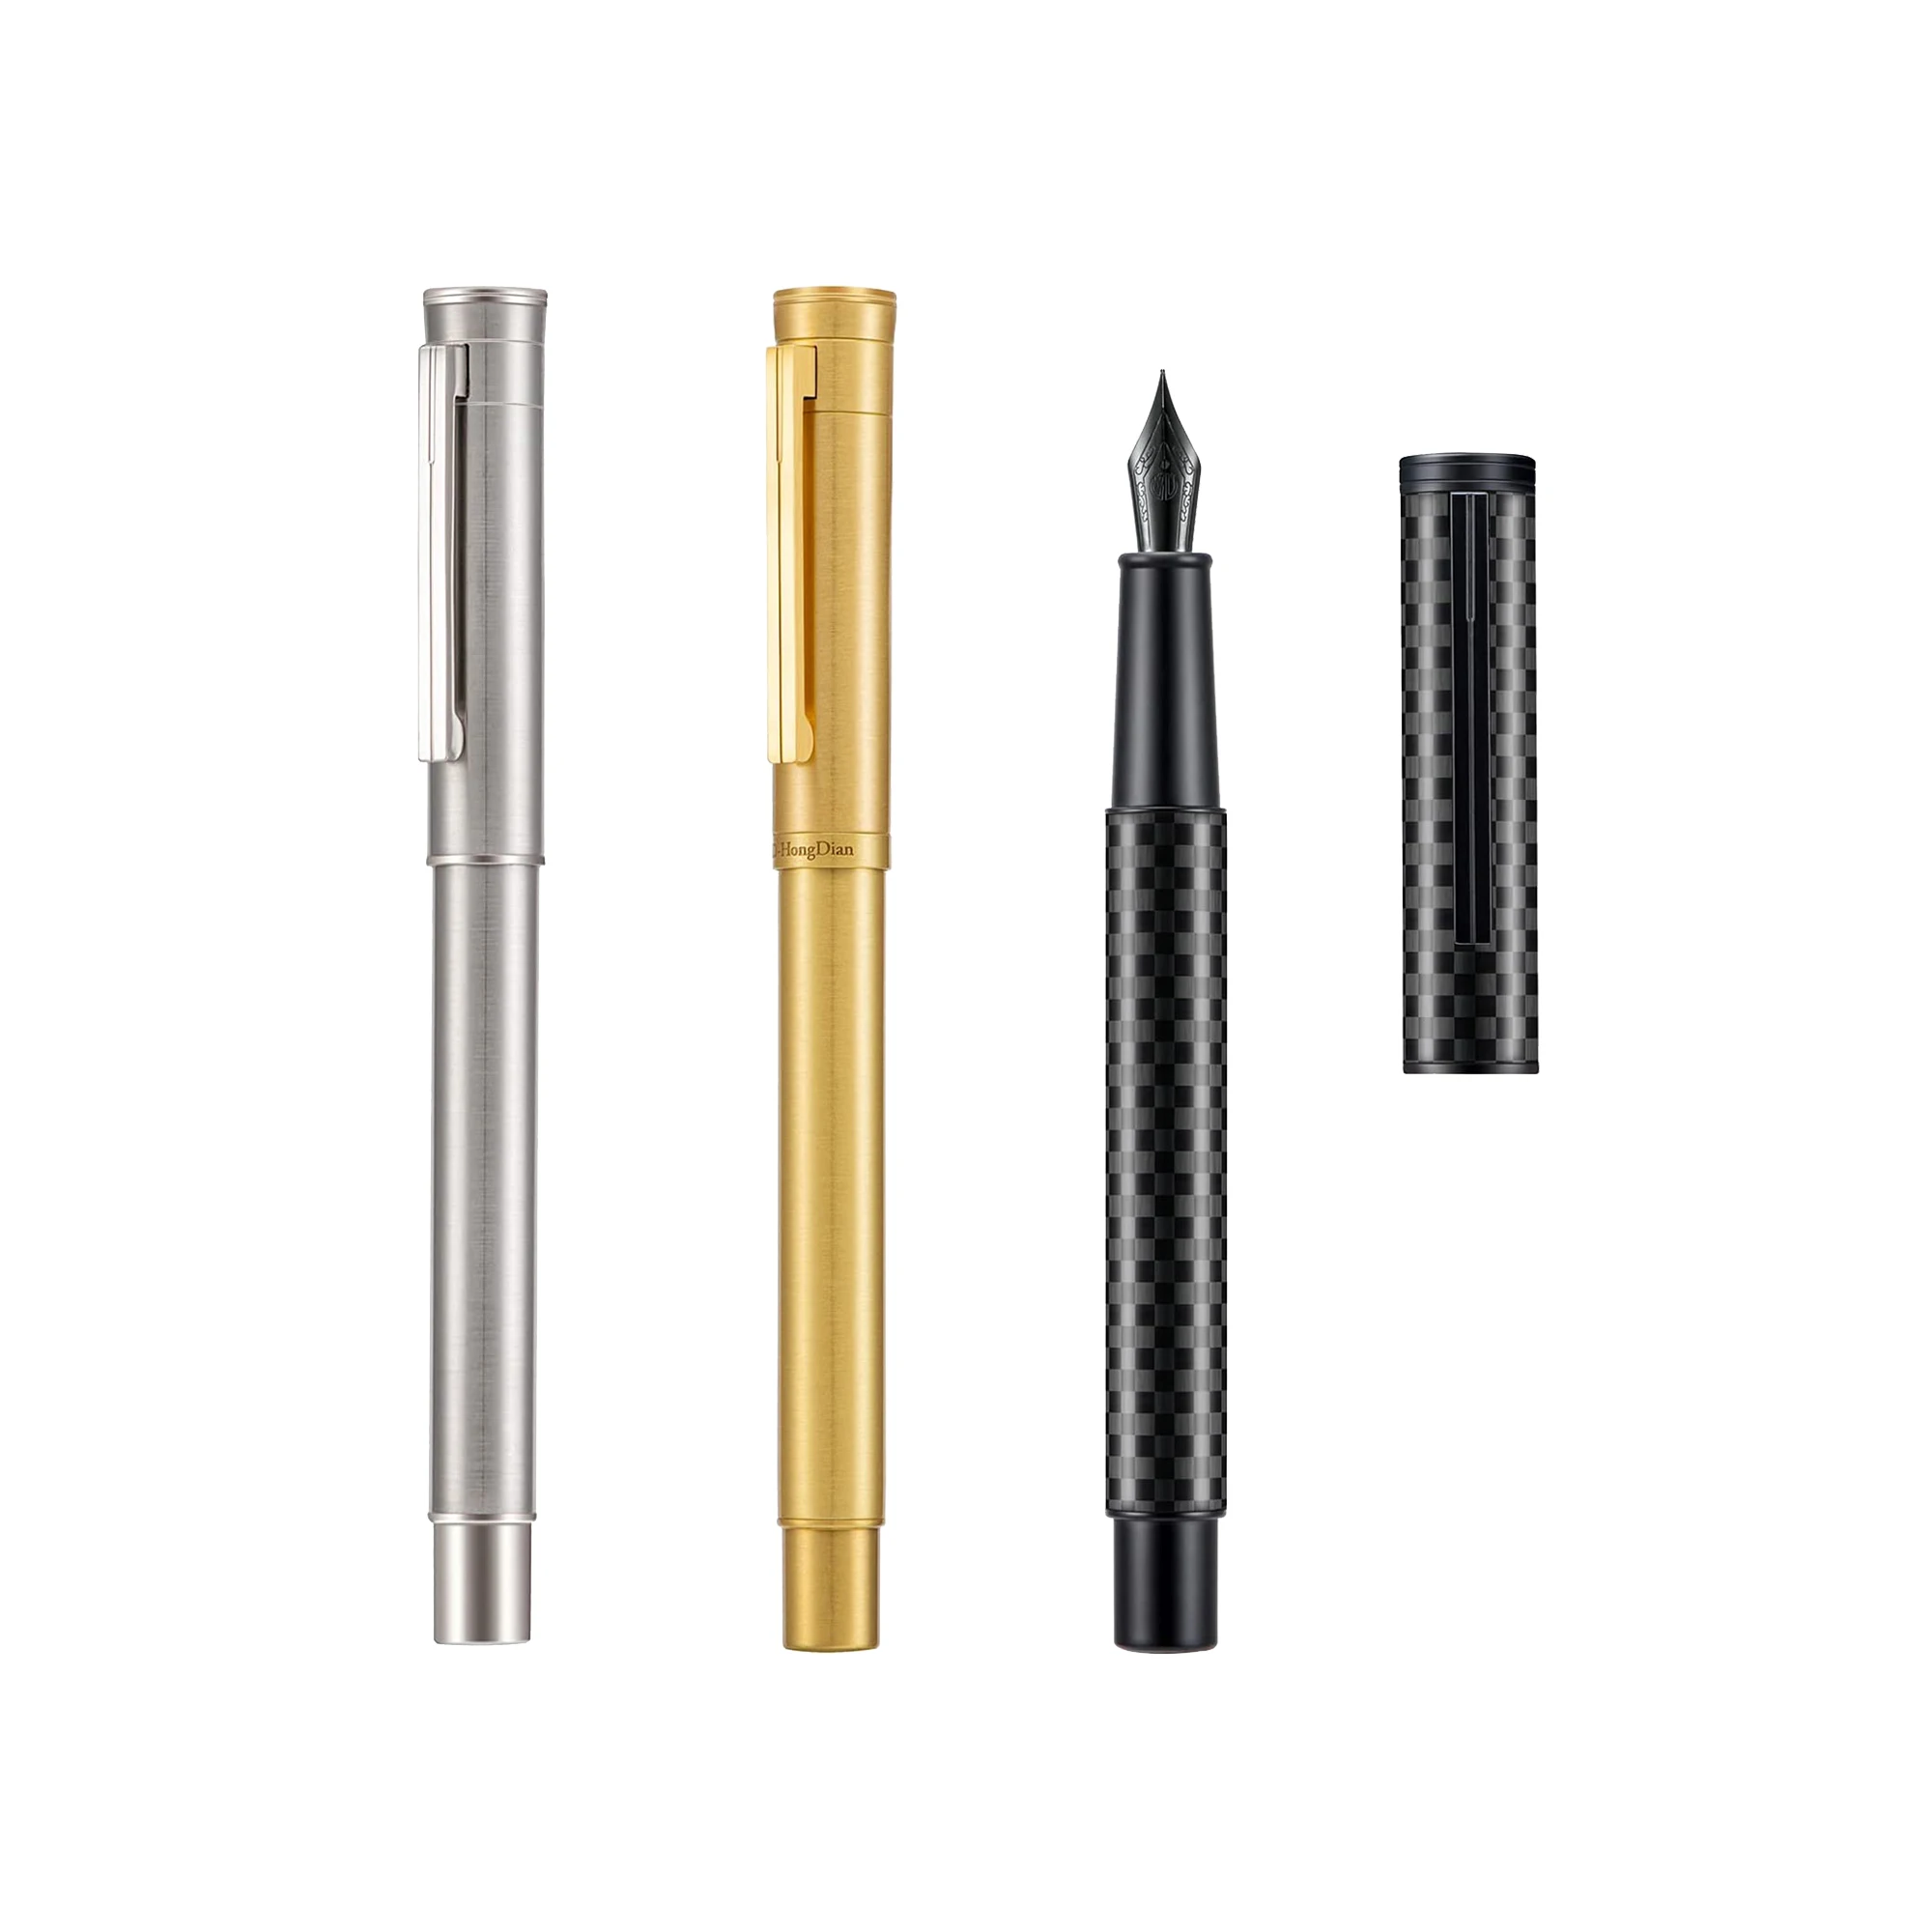 Hongdian 1861 Forest Fountain Pen EF/F/M/ Bent Nib, Classic Carbon Fiber, Metal Smooth Writing Pen Set